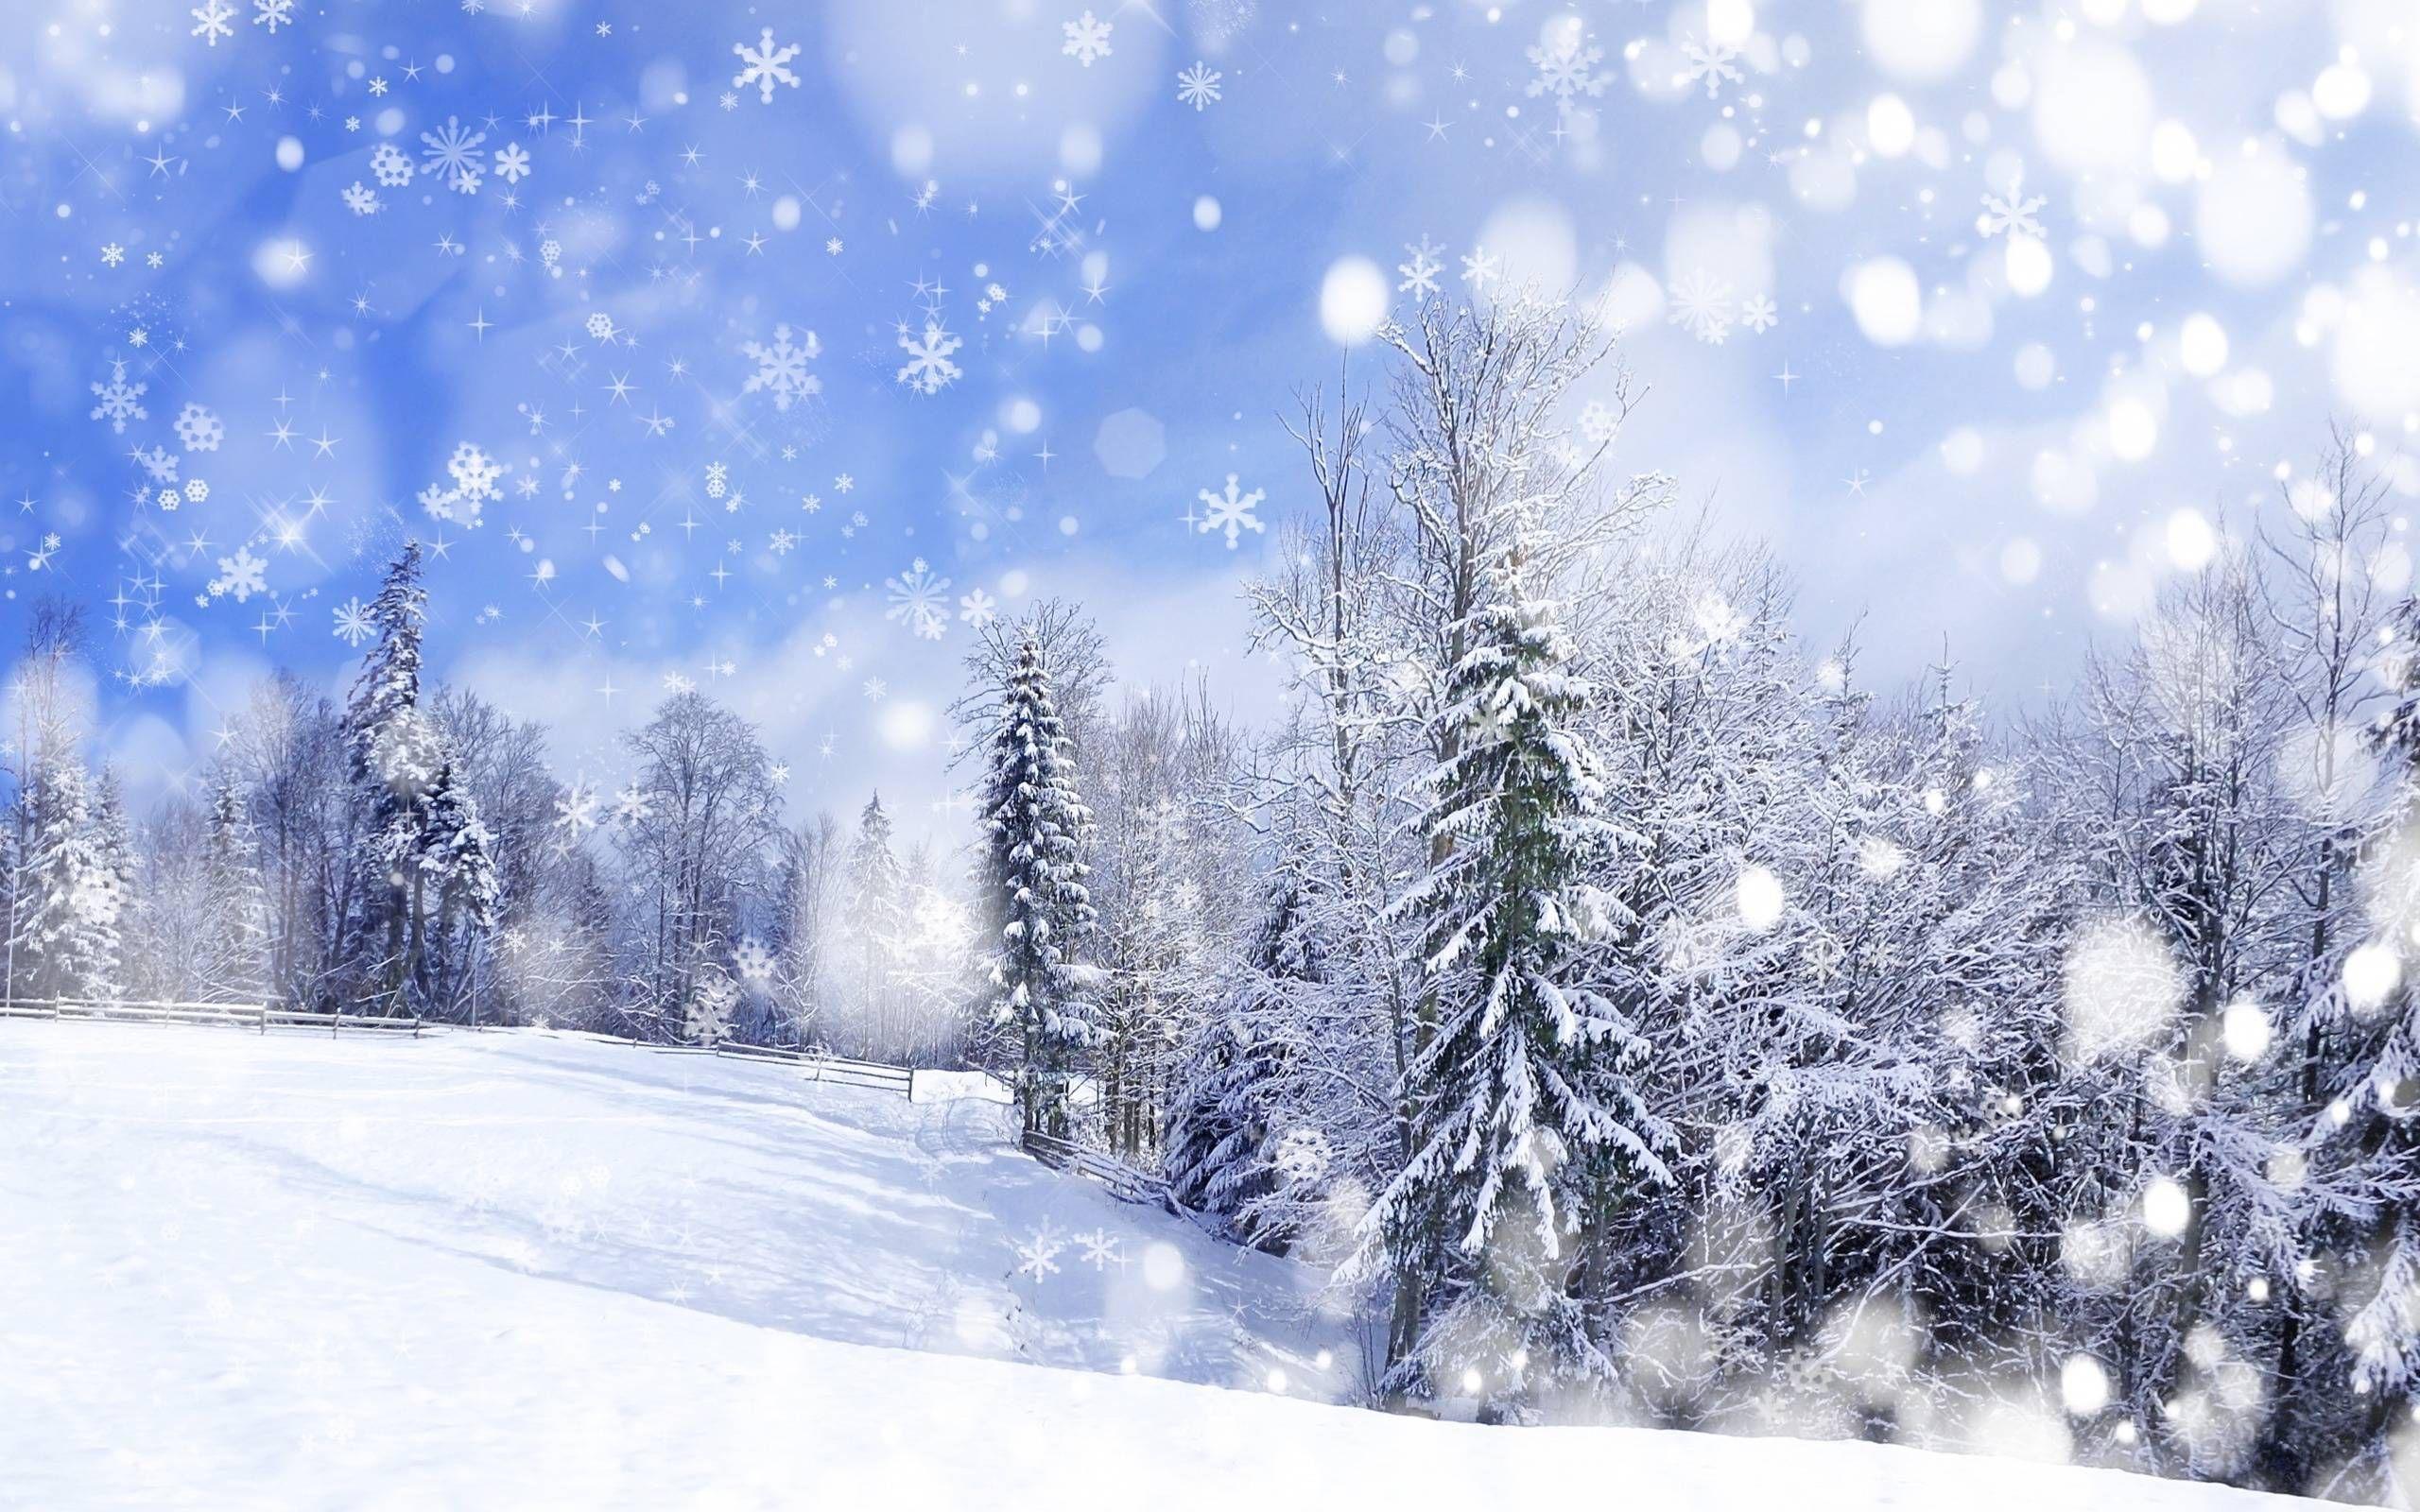 Anime Winter Scenery Wallpaper 1. Winter Scenery, Winter Wallpaper, Anime Snow